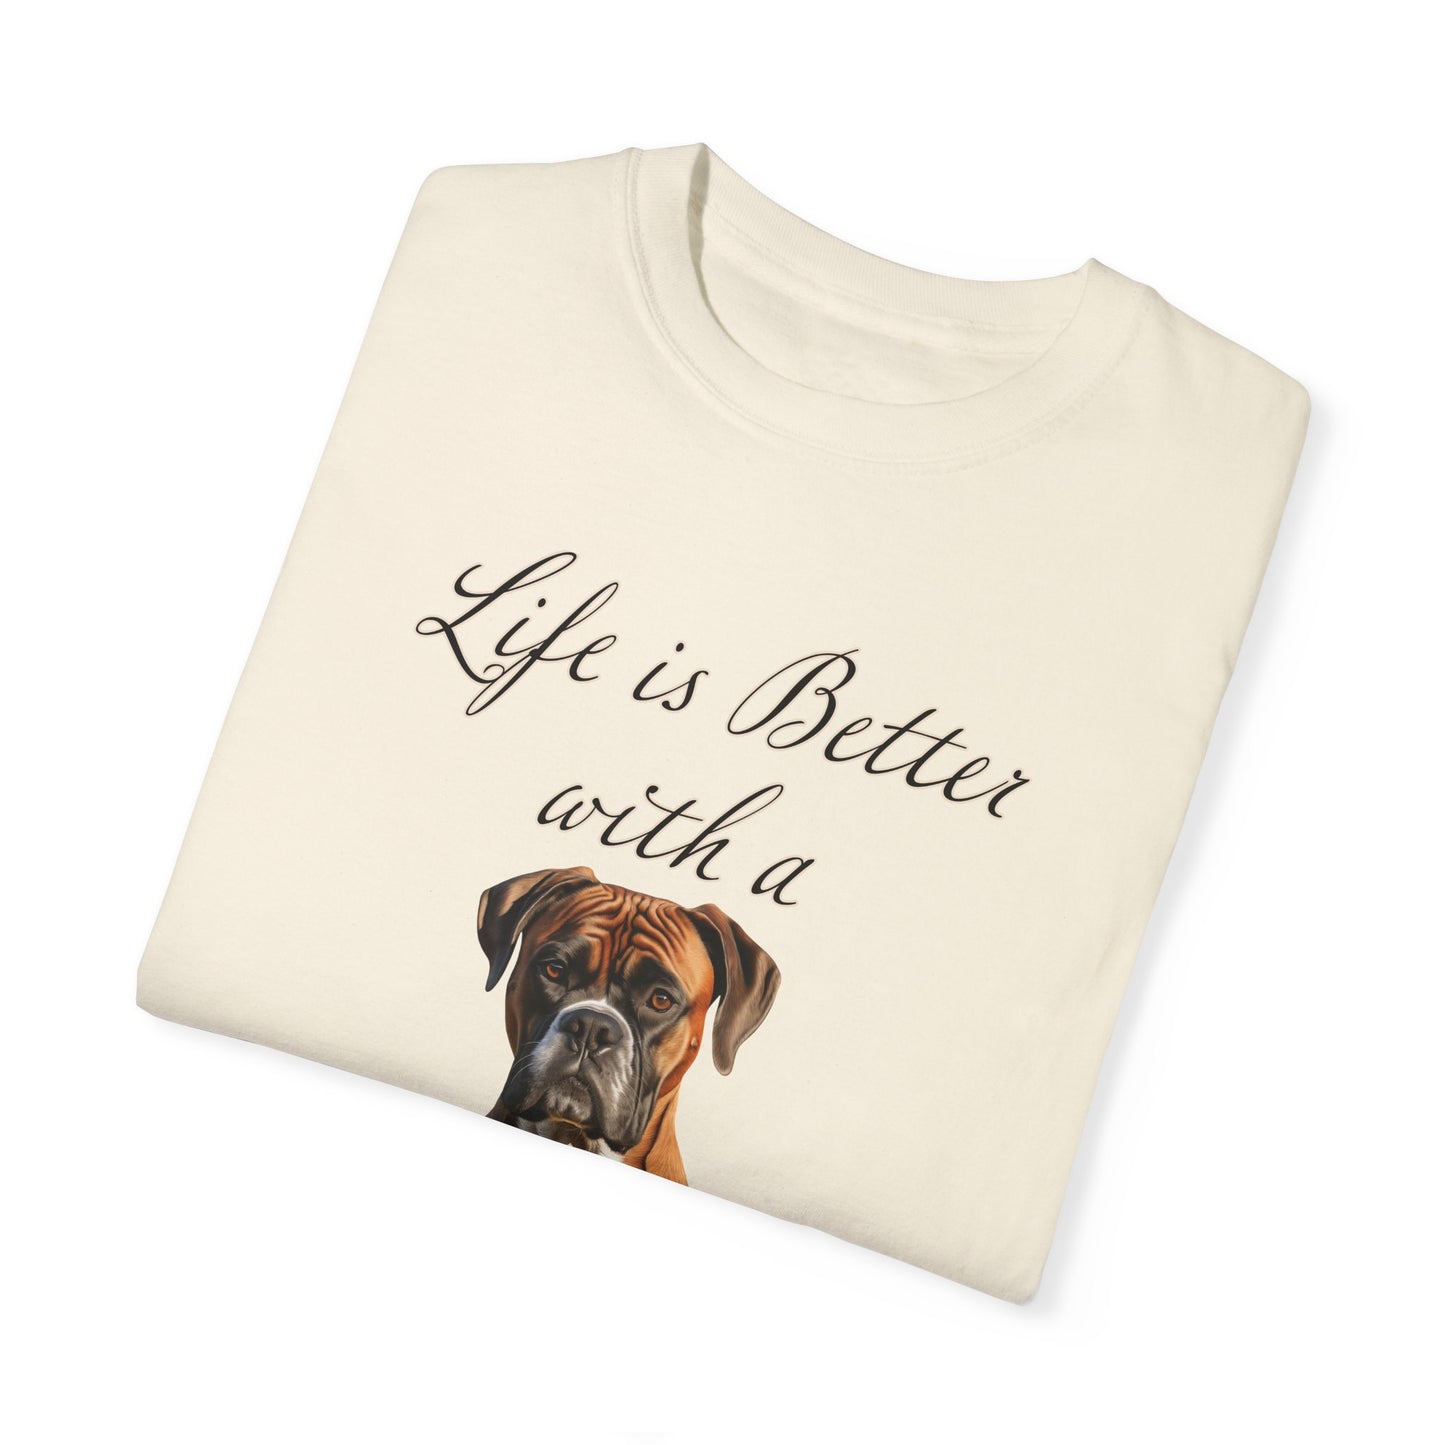 Boxer Tshirt - Dog Mom Shirt, Dog Dad Shirt, gift for Dog Mom